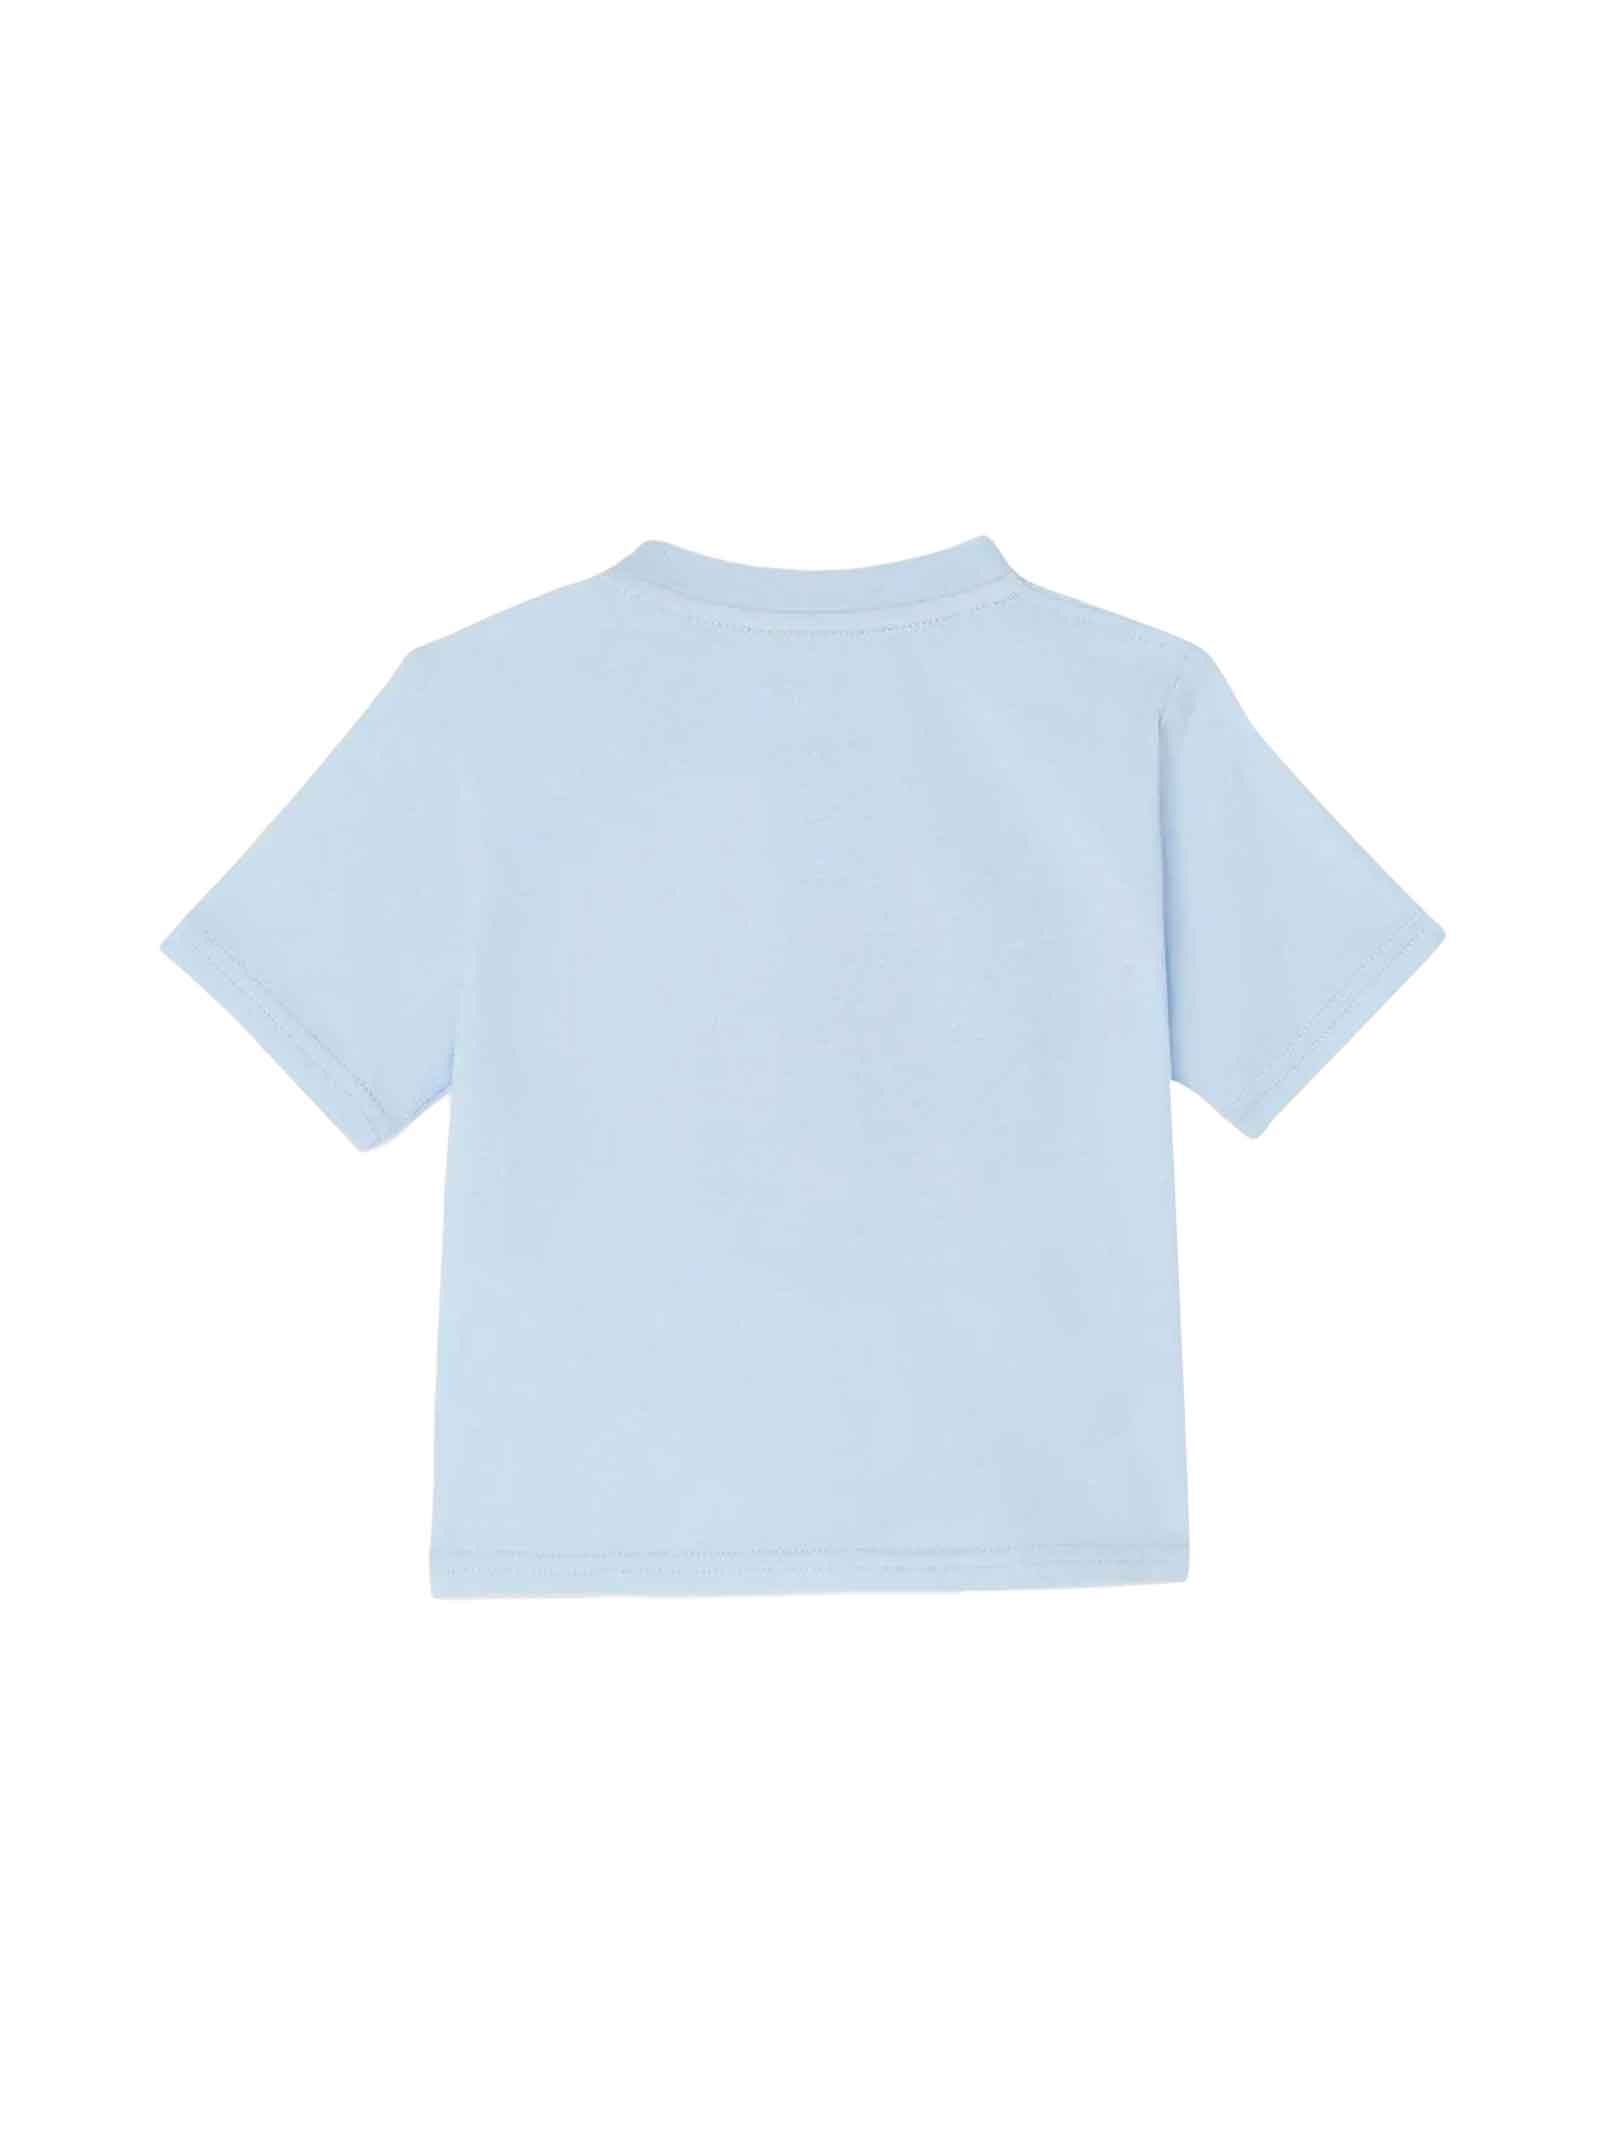 Shop Burberry Blue T-shirt Baby Boy